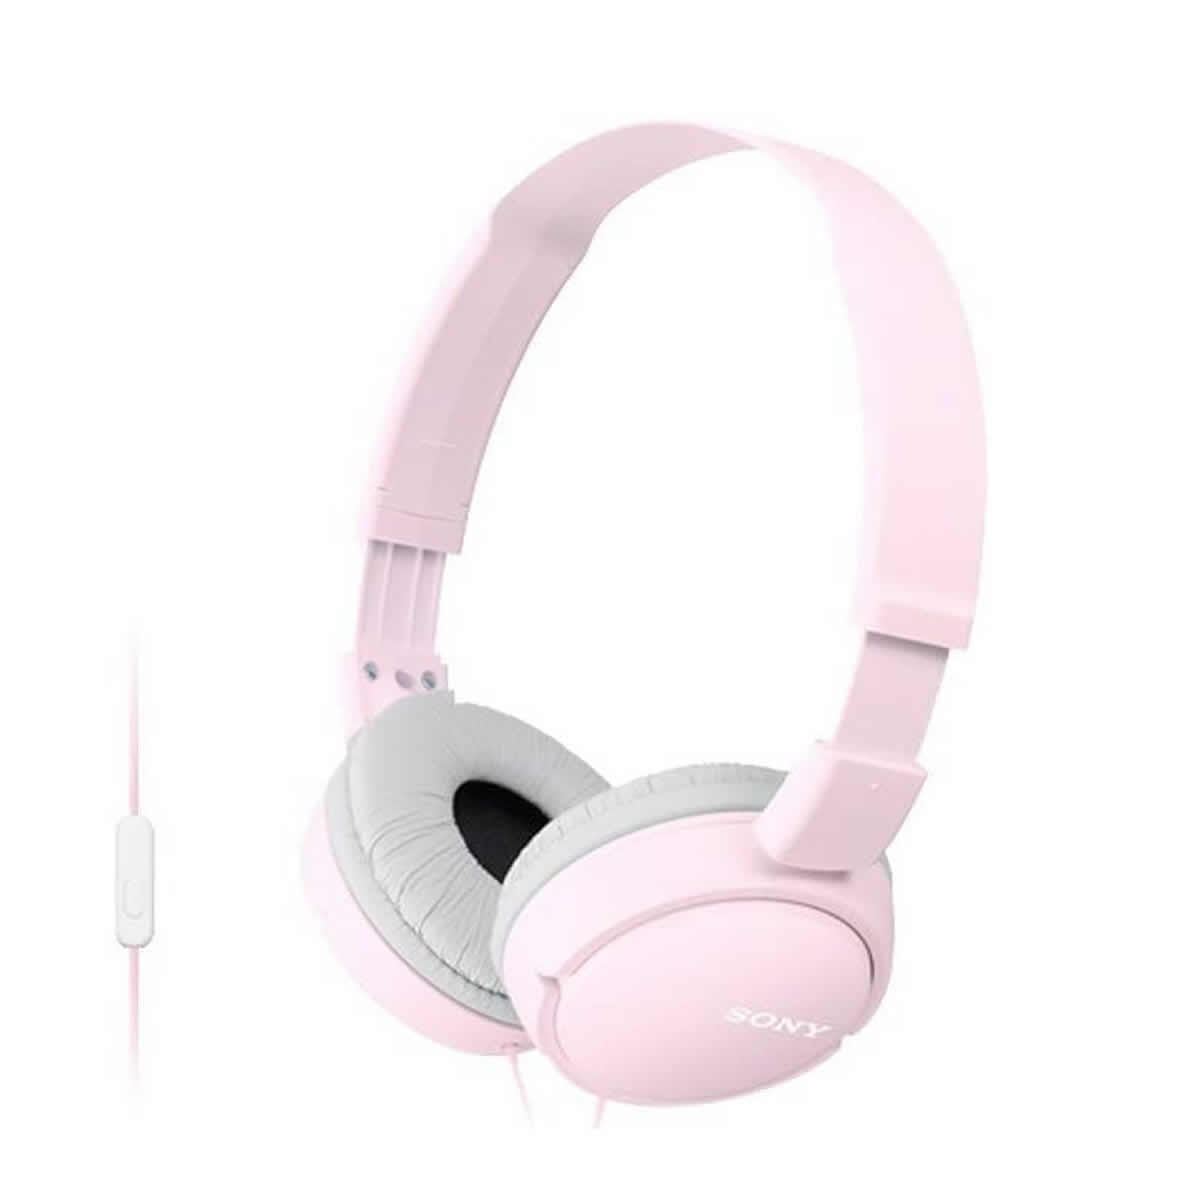 Sony Headband Corded Headphones 30mm Driver Unit Pink